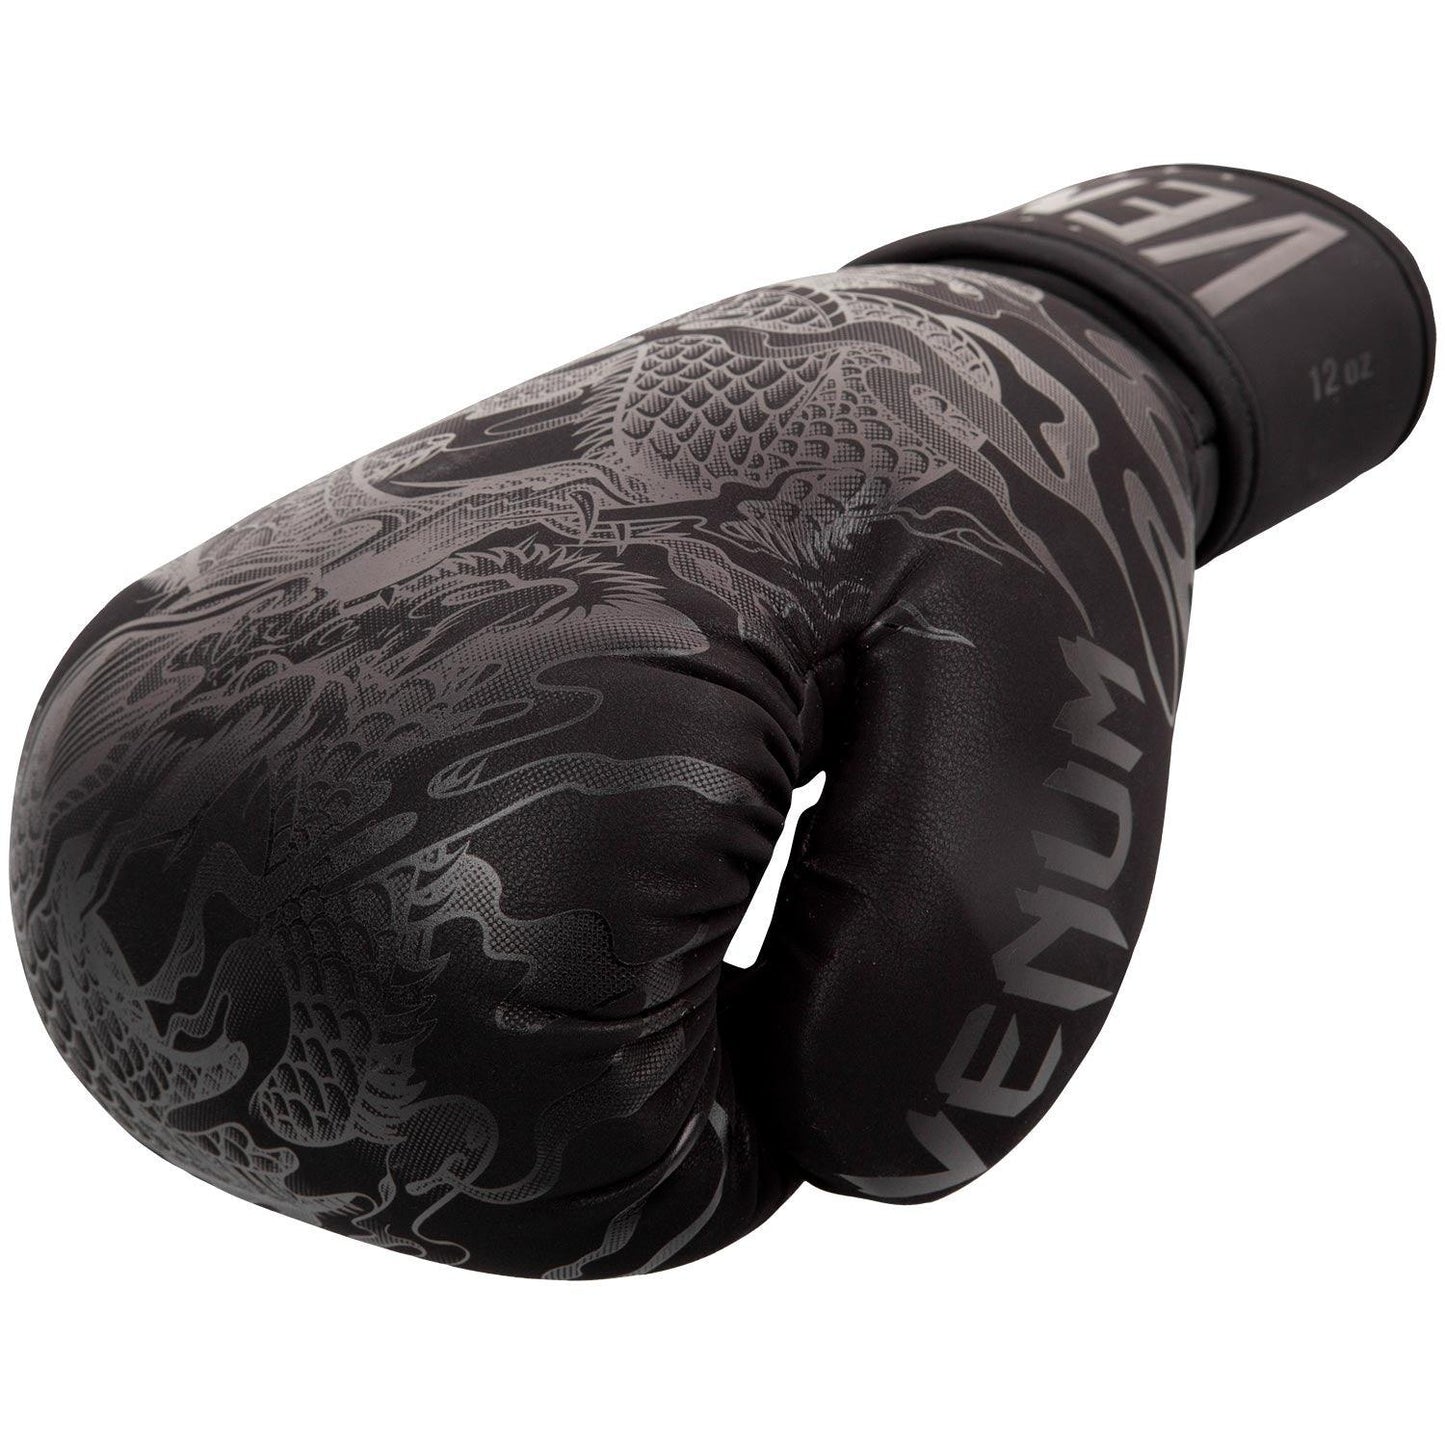 Venum Dragon's Flight Boxing Gloves - Black/Black Picture 4